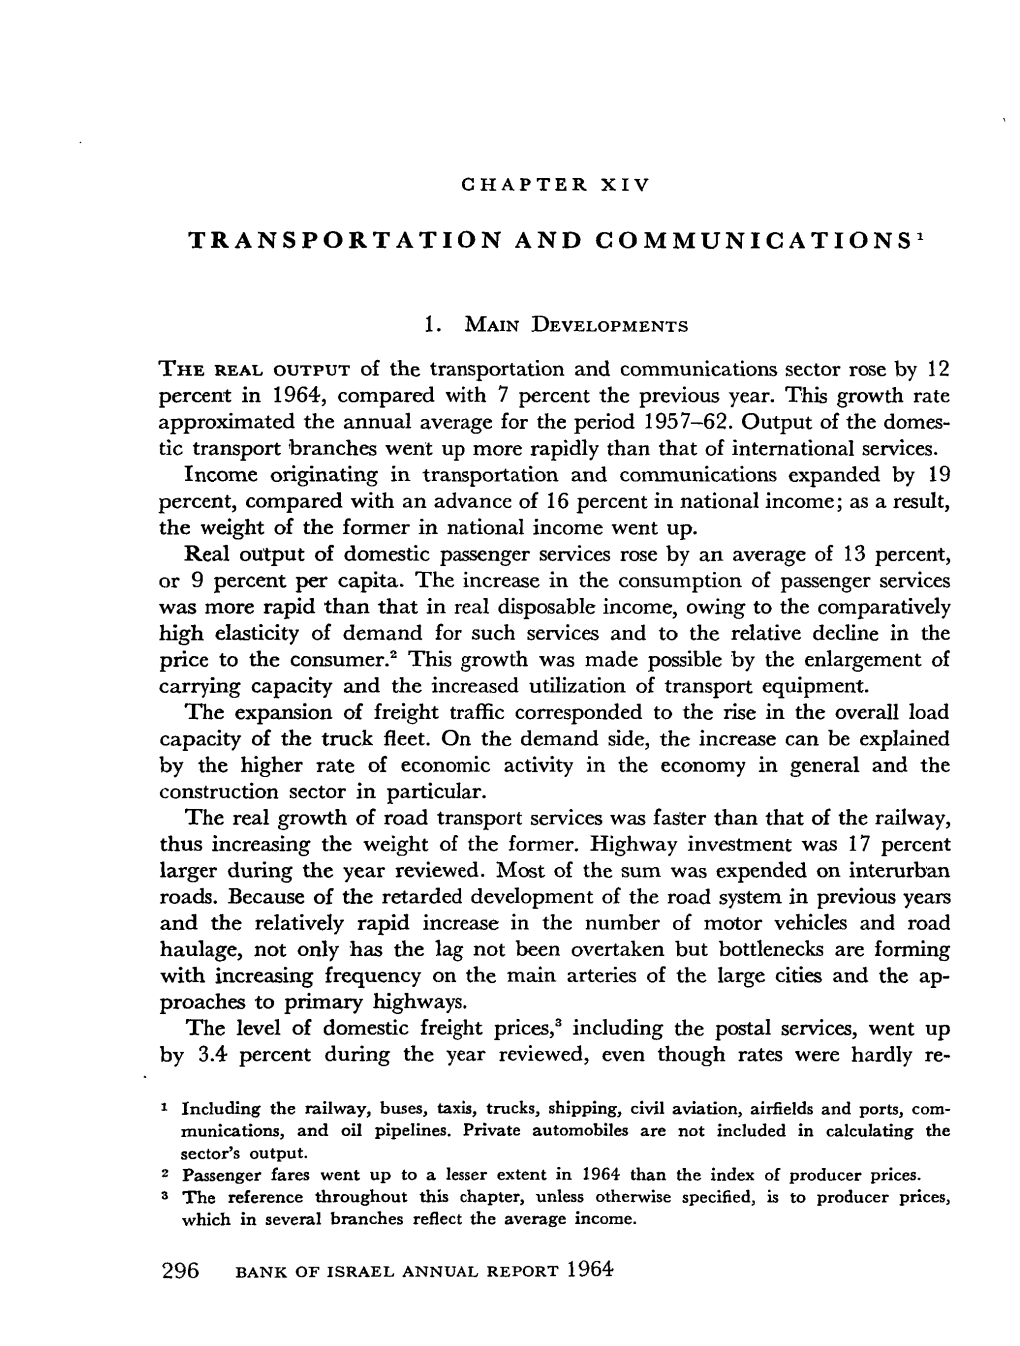 Transportation and Communications1